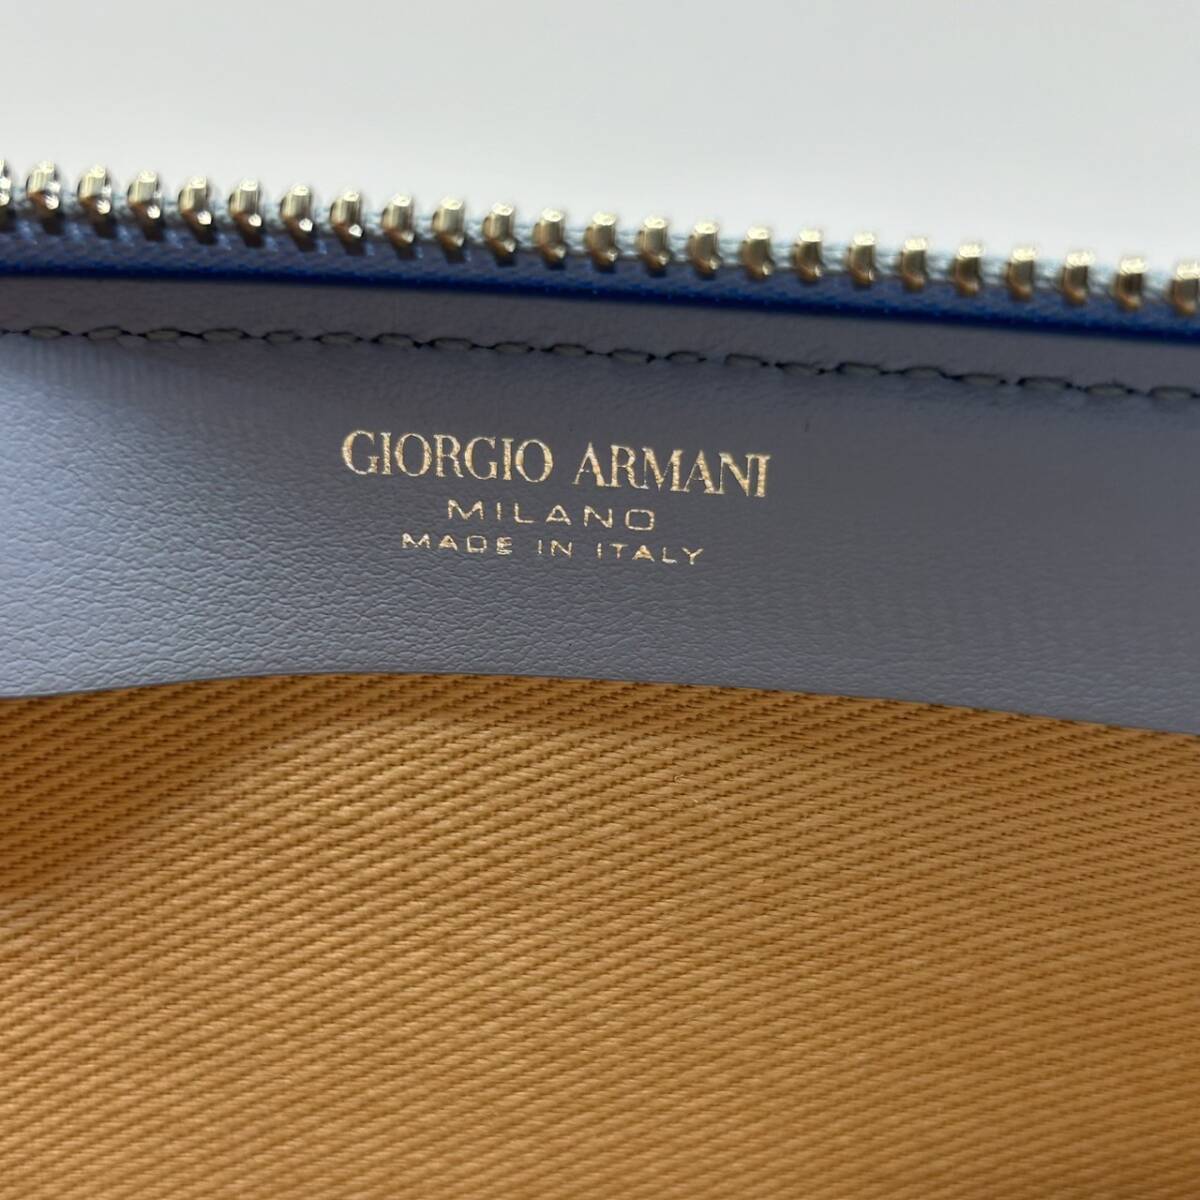 A) GIORGIO ARMANI /joru geo Armani YKK clutch bag light blue blue blue Armani clutch bag lady's men's D2003